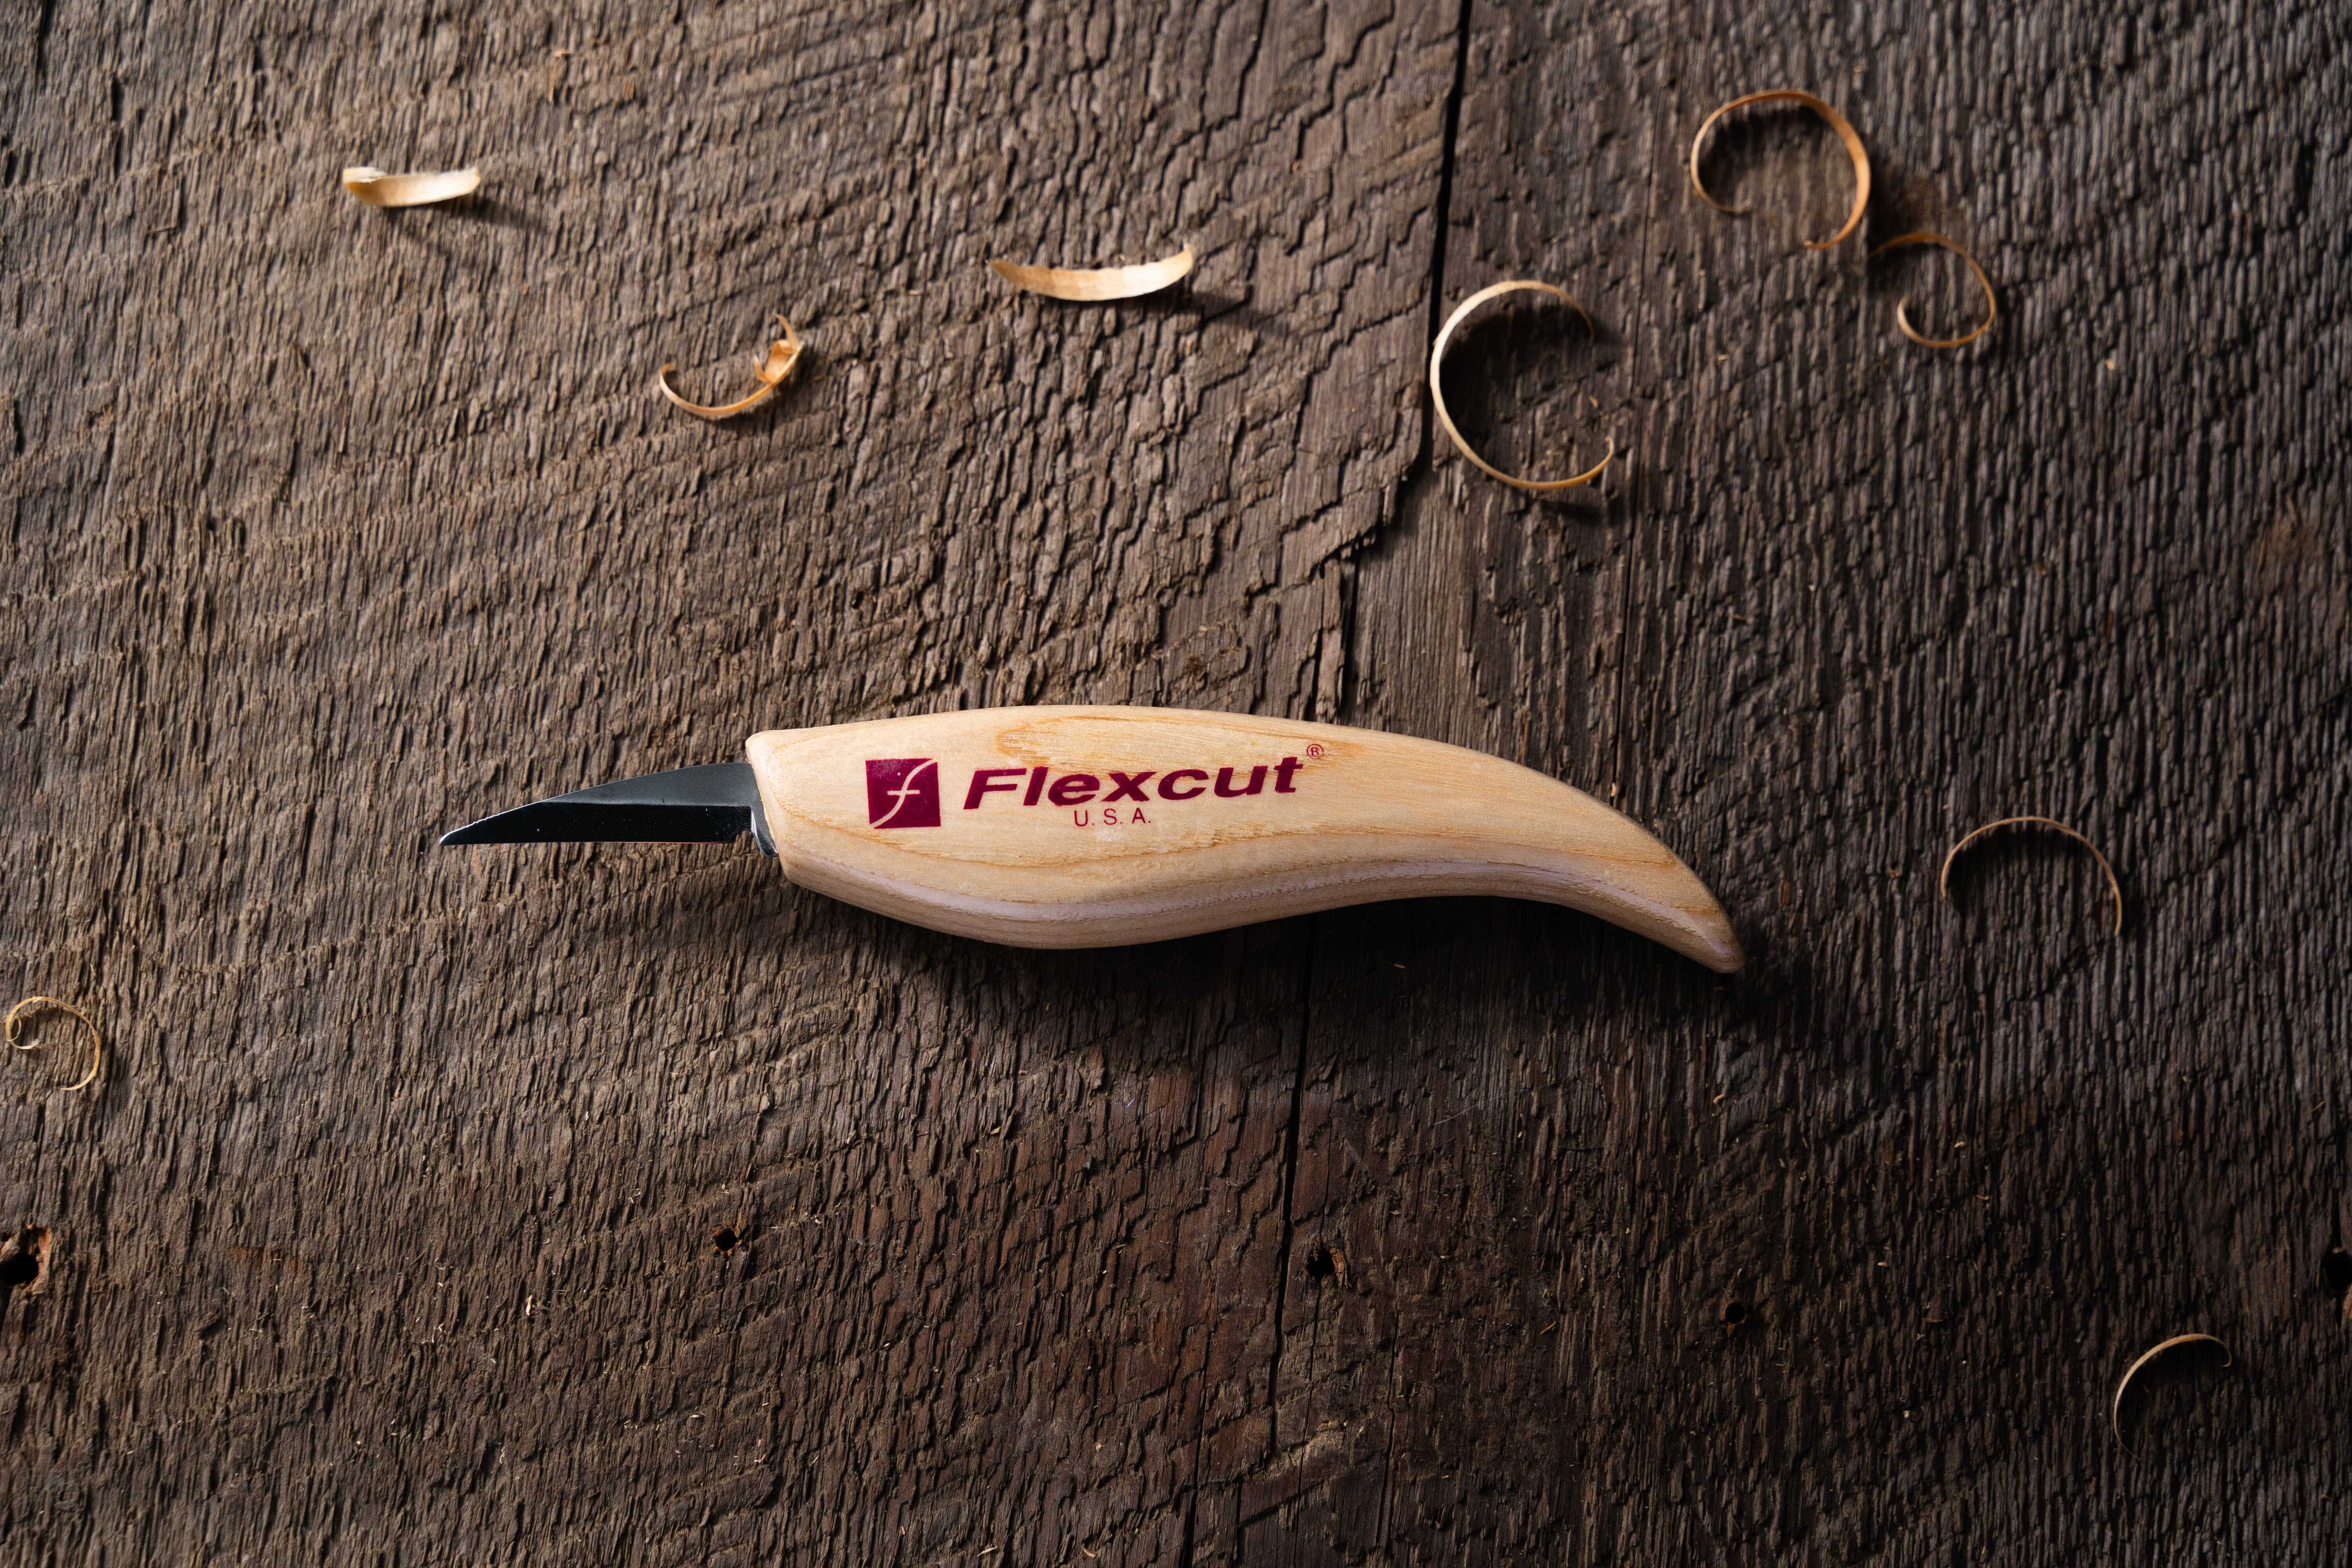 KN13 Detail Knife - Flexcut Tool Company